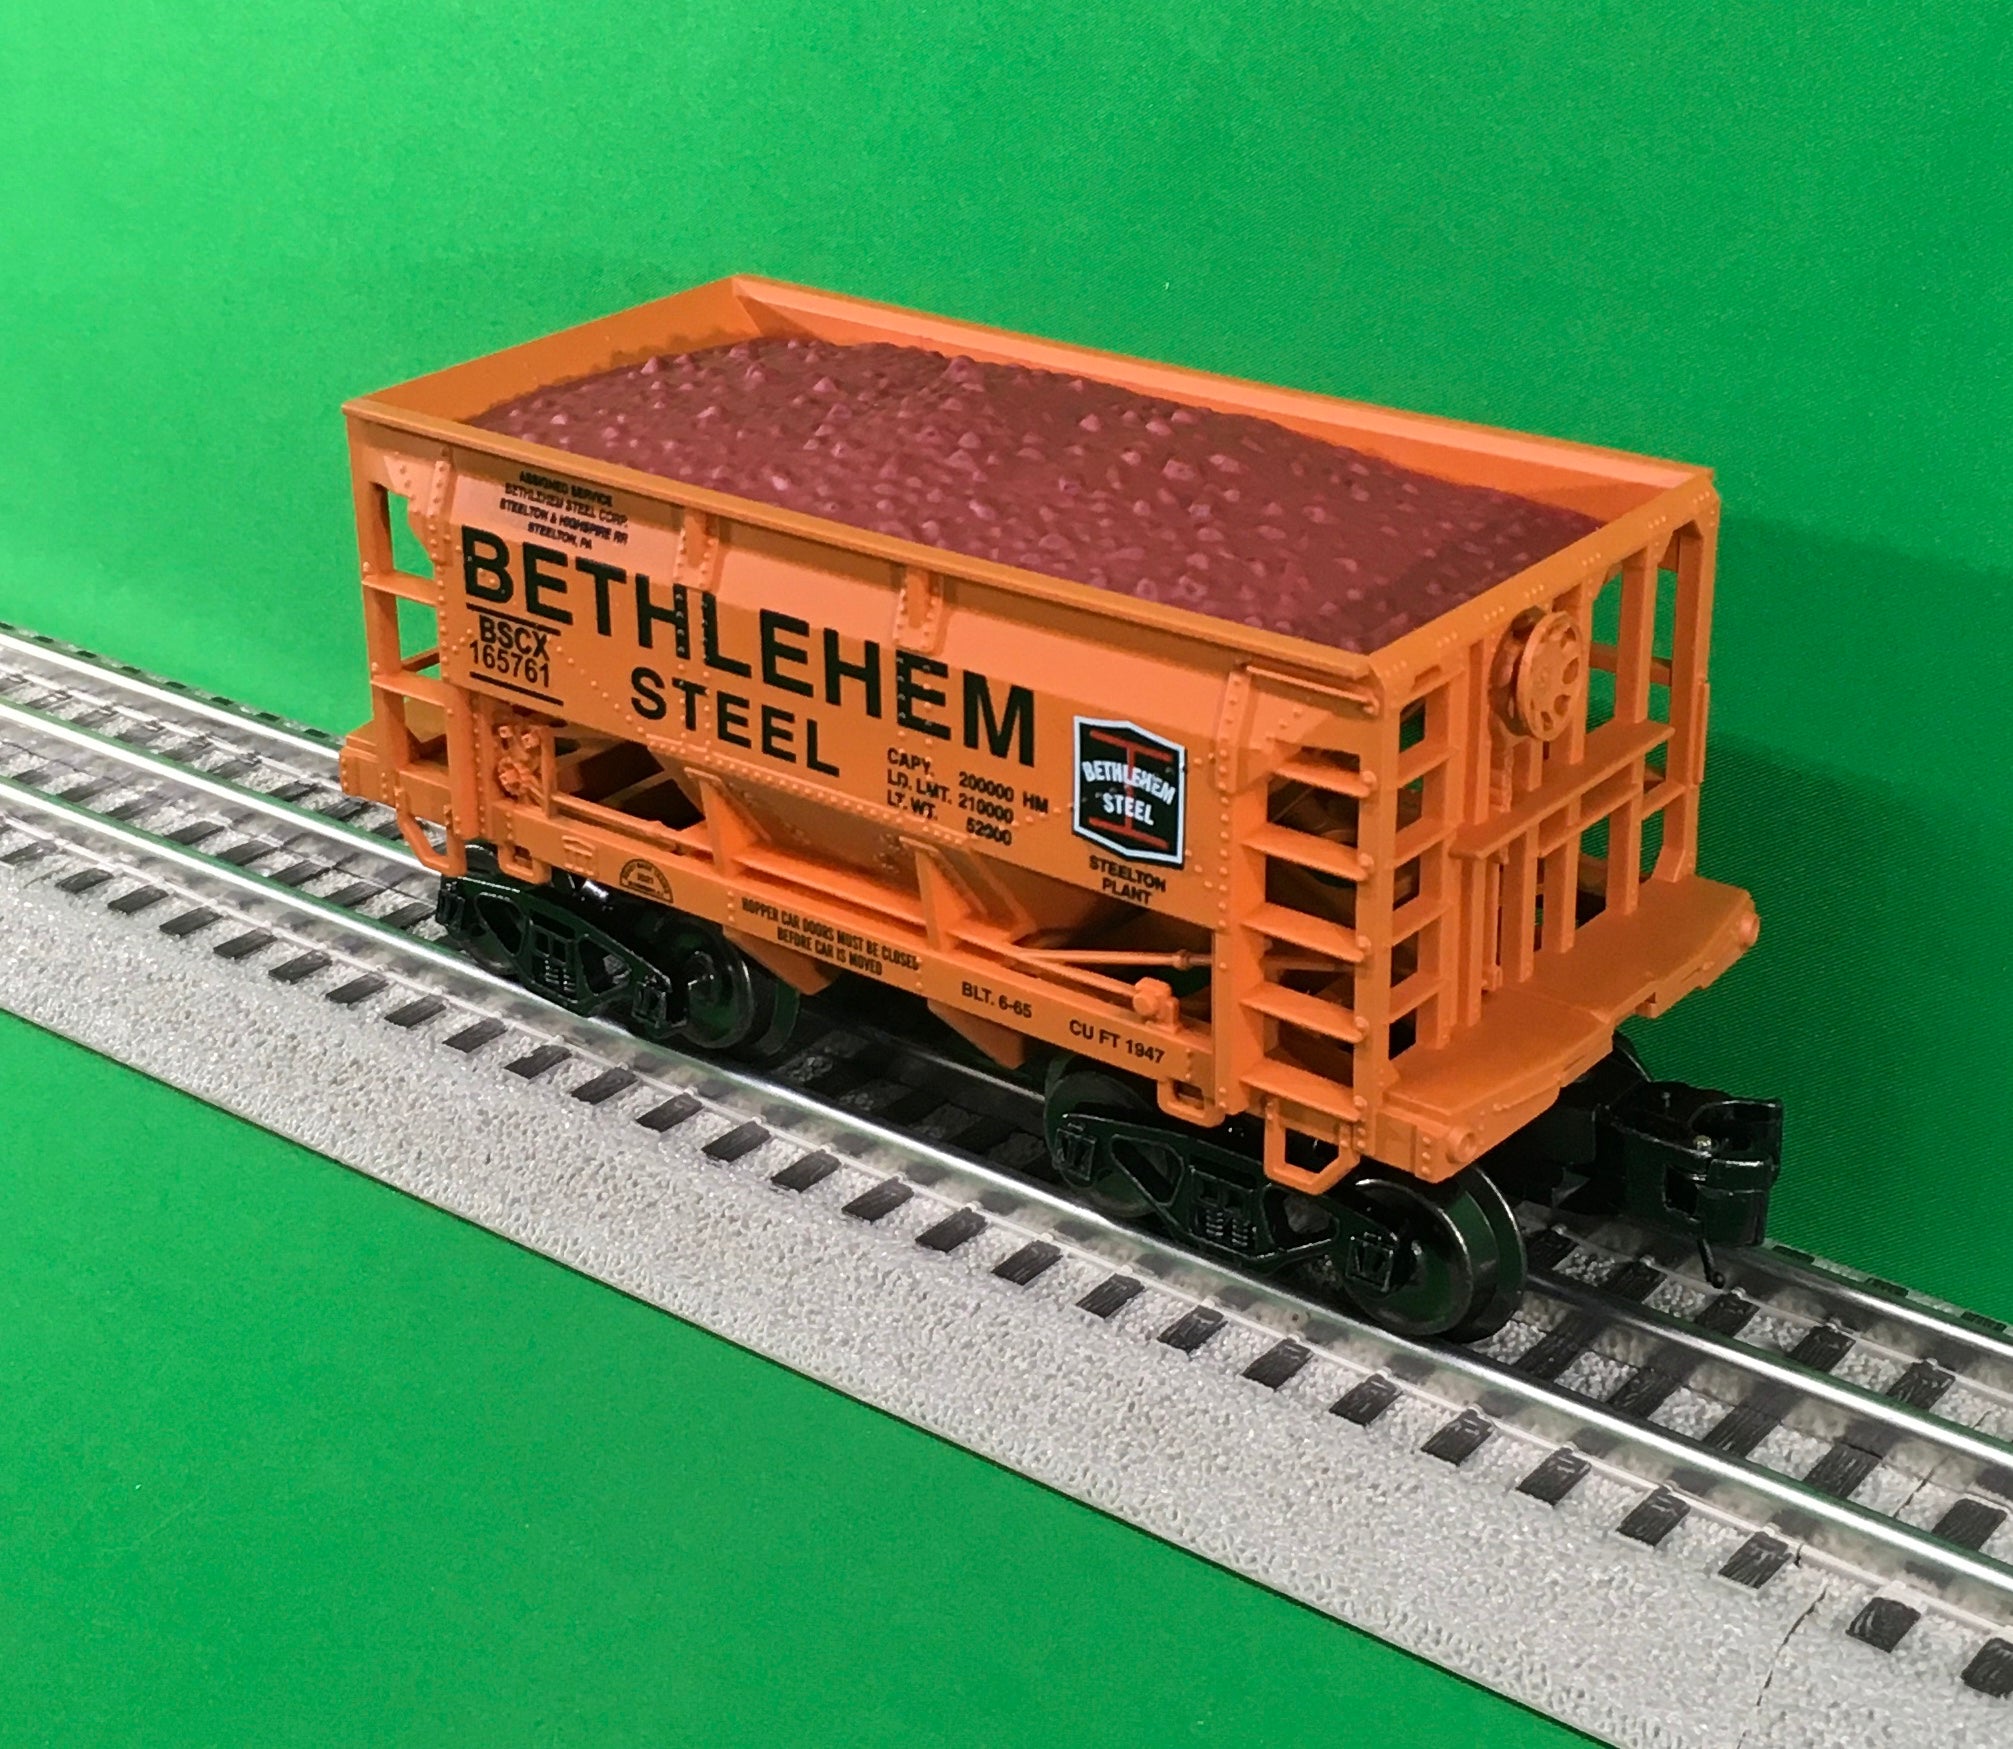 Ready Made Trains RMT-96719-421 - Ore Car "Bethlehem Steel" (Steelton, PA Plant)